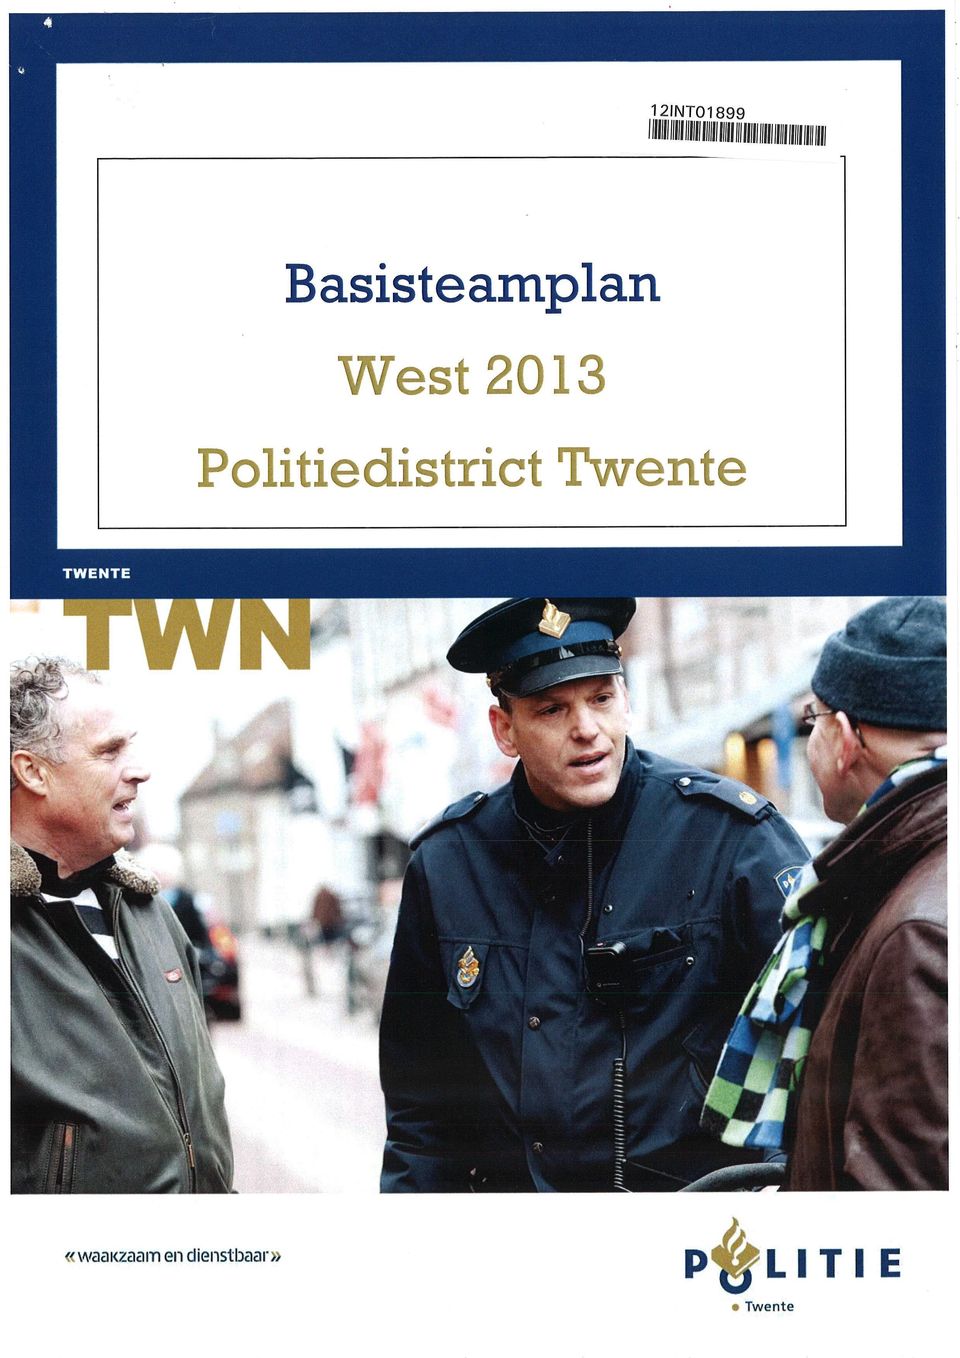 Politiedistrict Twente